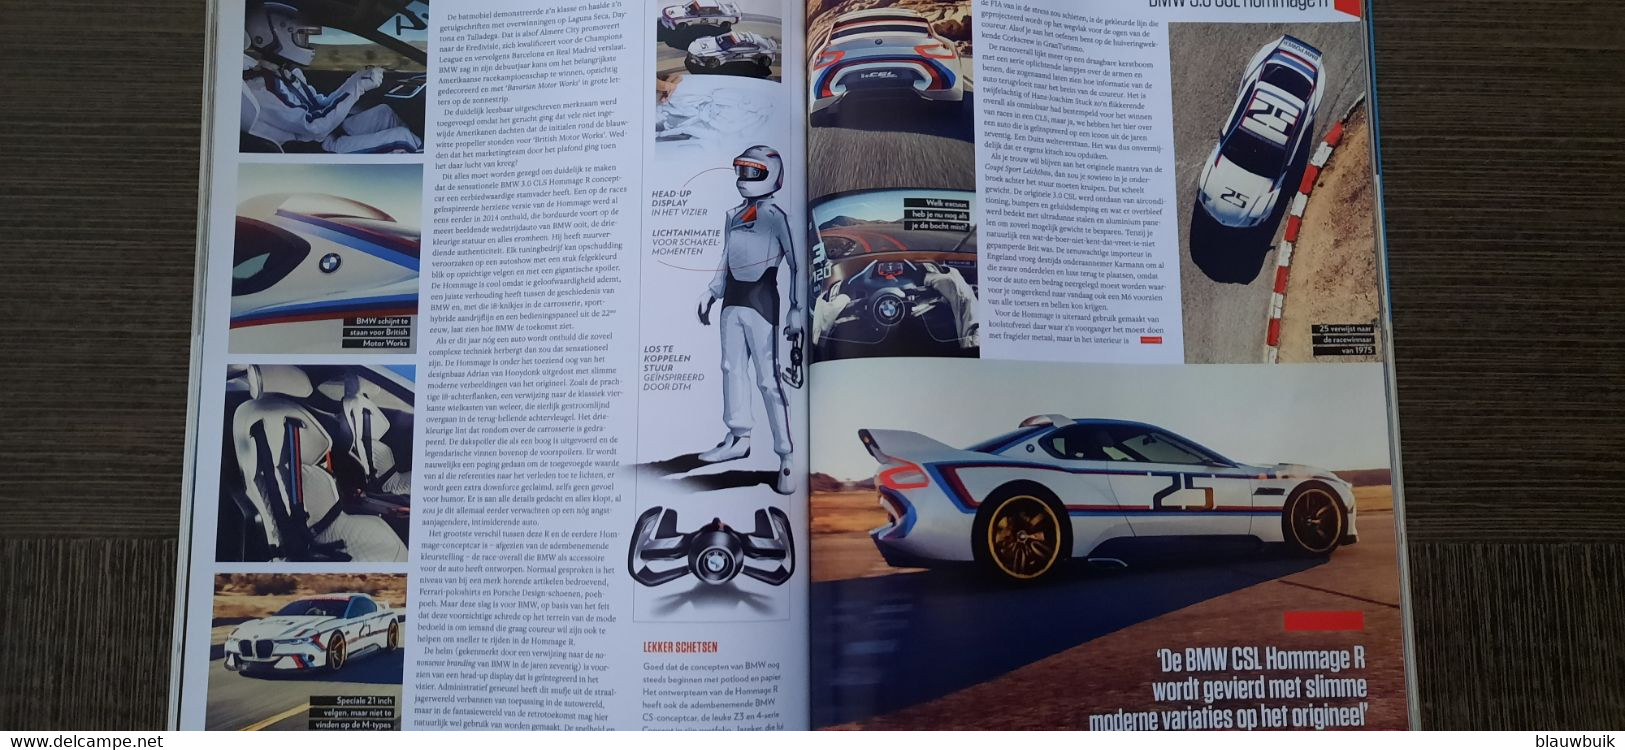 Top Gear Magazine N°125 -  2015 - De 133 Coolste Auto's - Auto/moto